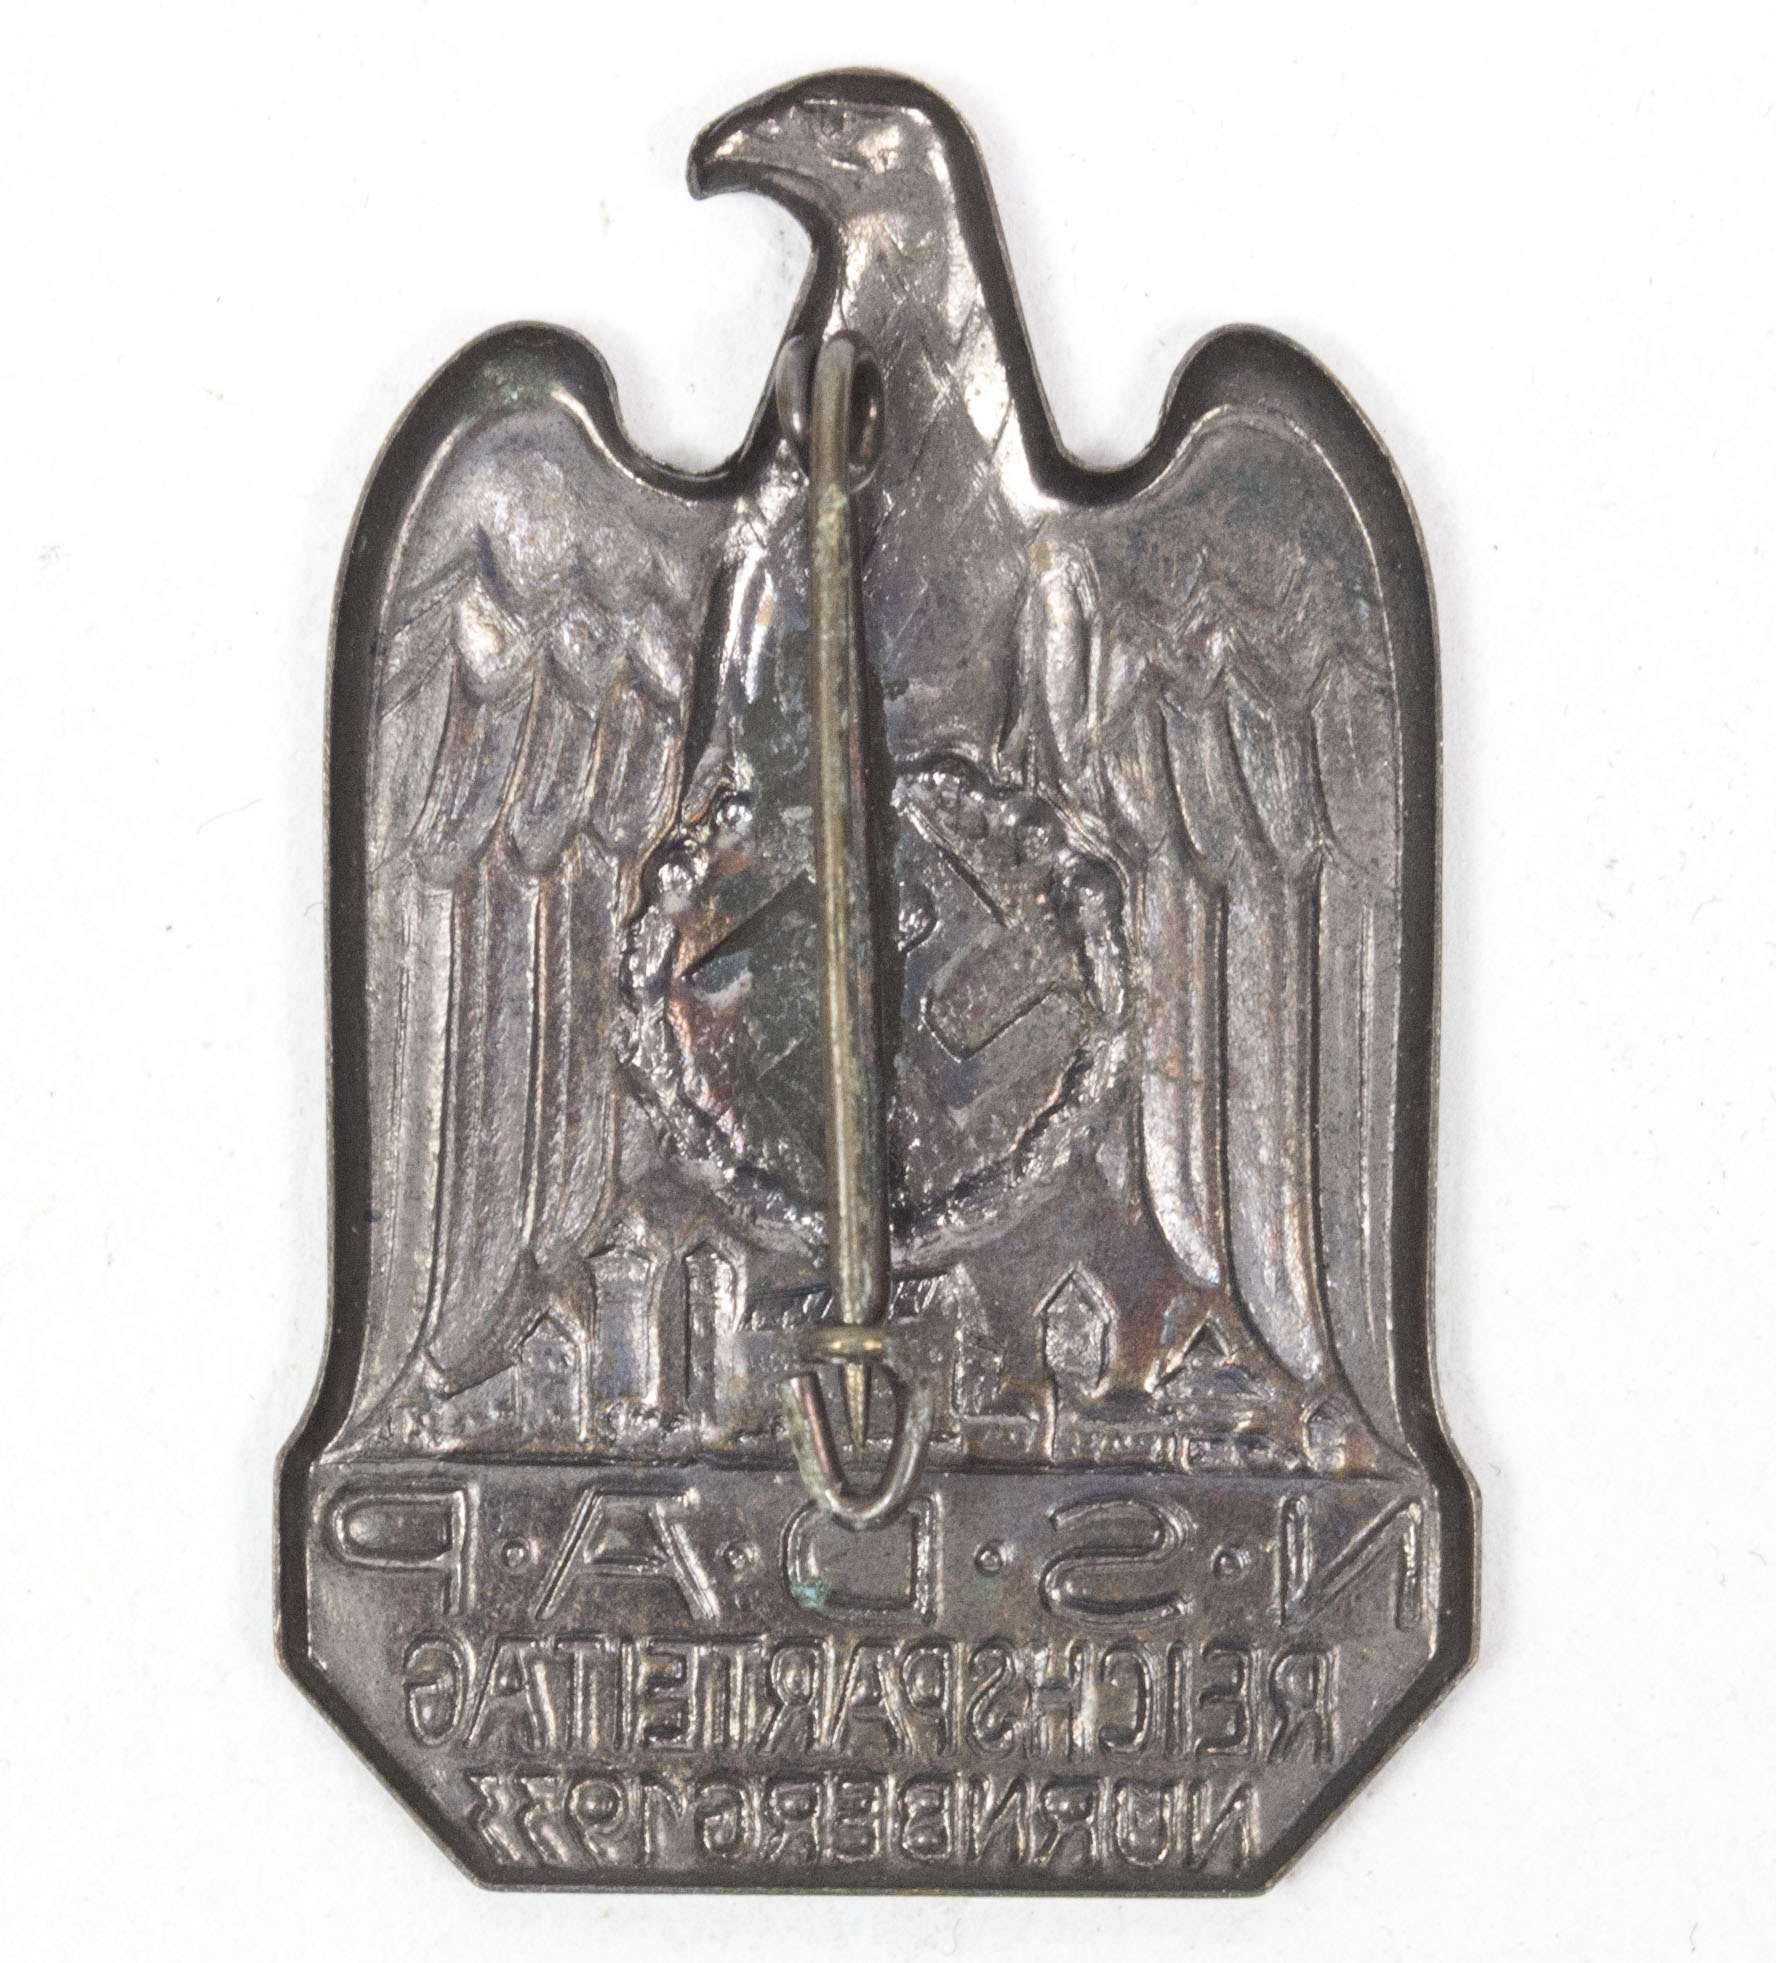 NSDAP Reichsparteitag Nürnberg 1933 badge (hollow variation)